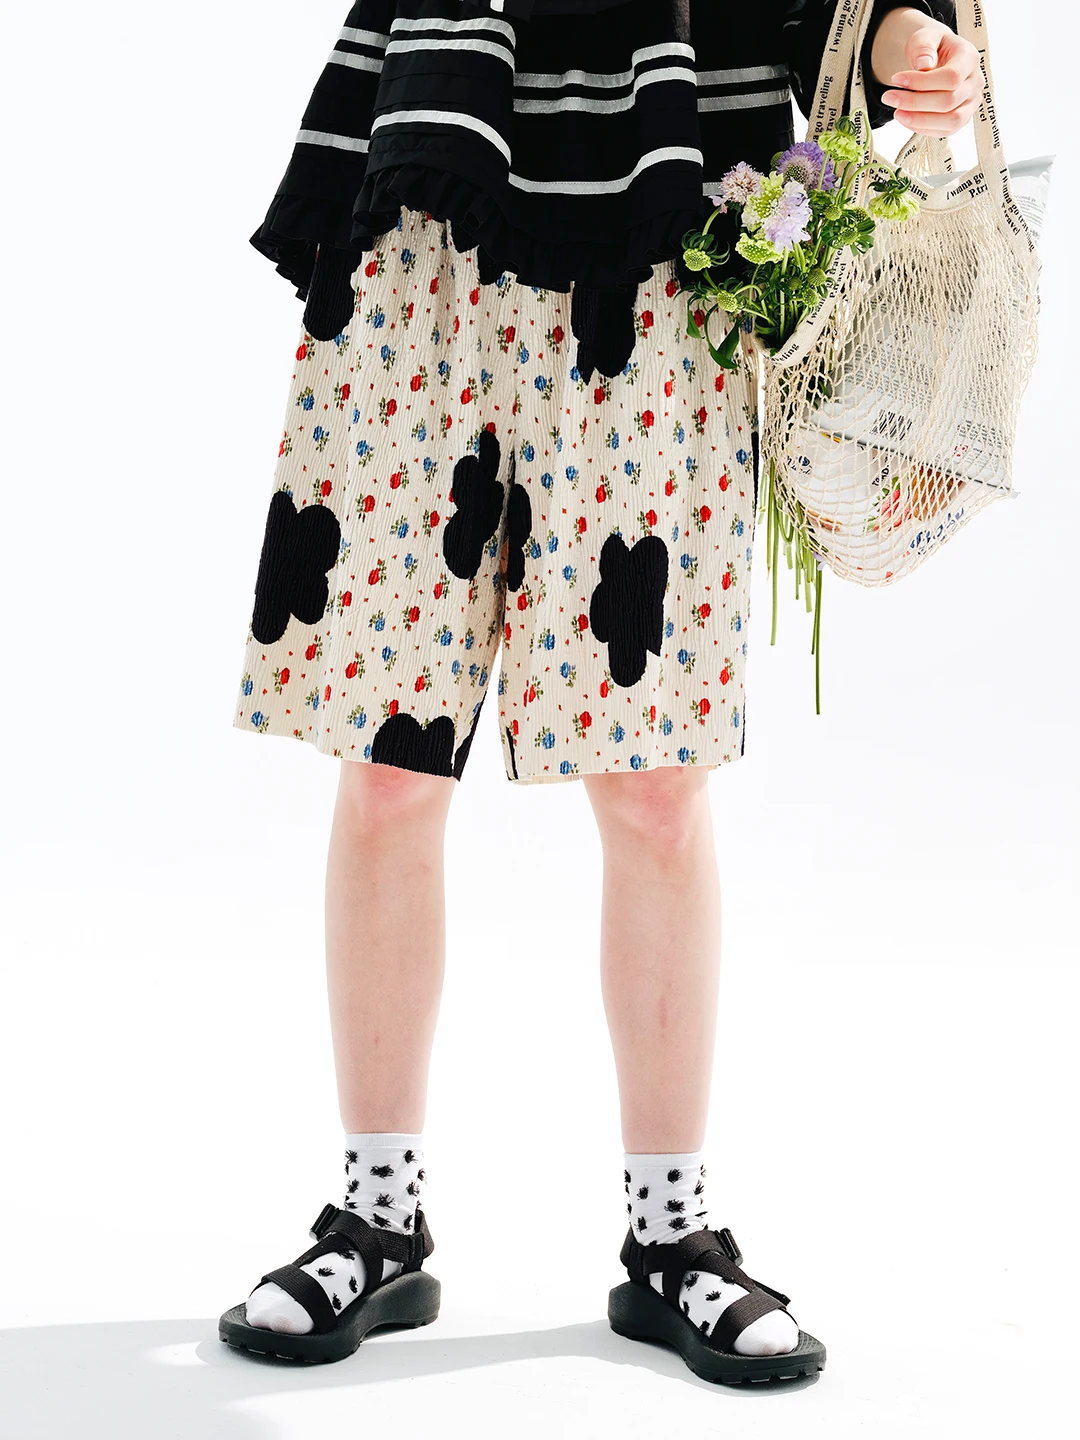 imakokoni-original-verao-floral-damasco-shorts-decalque-para-mostrar-calcas-finas-de-niquel-das-mulheres-calcoes-casuais-234068